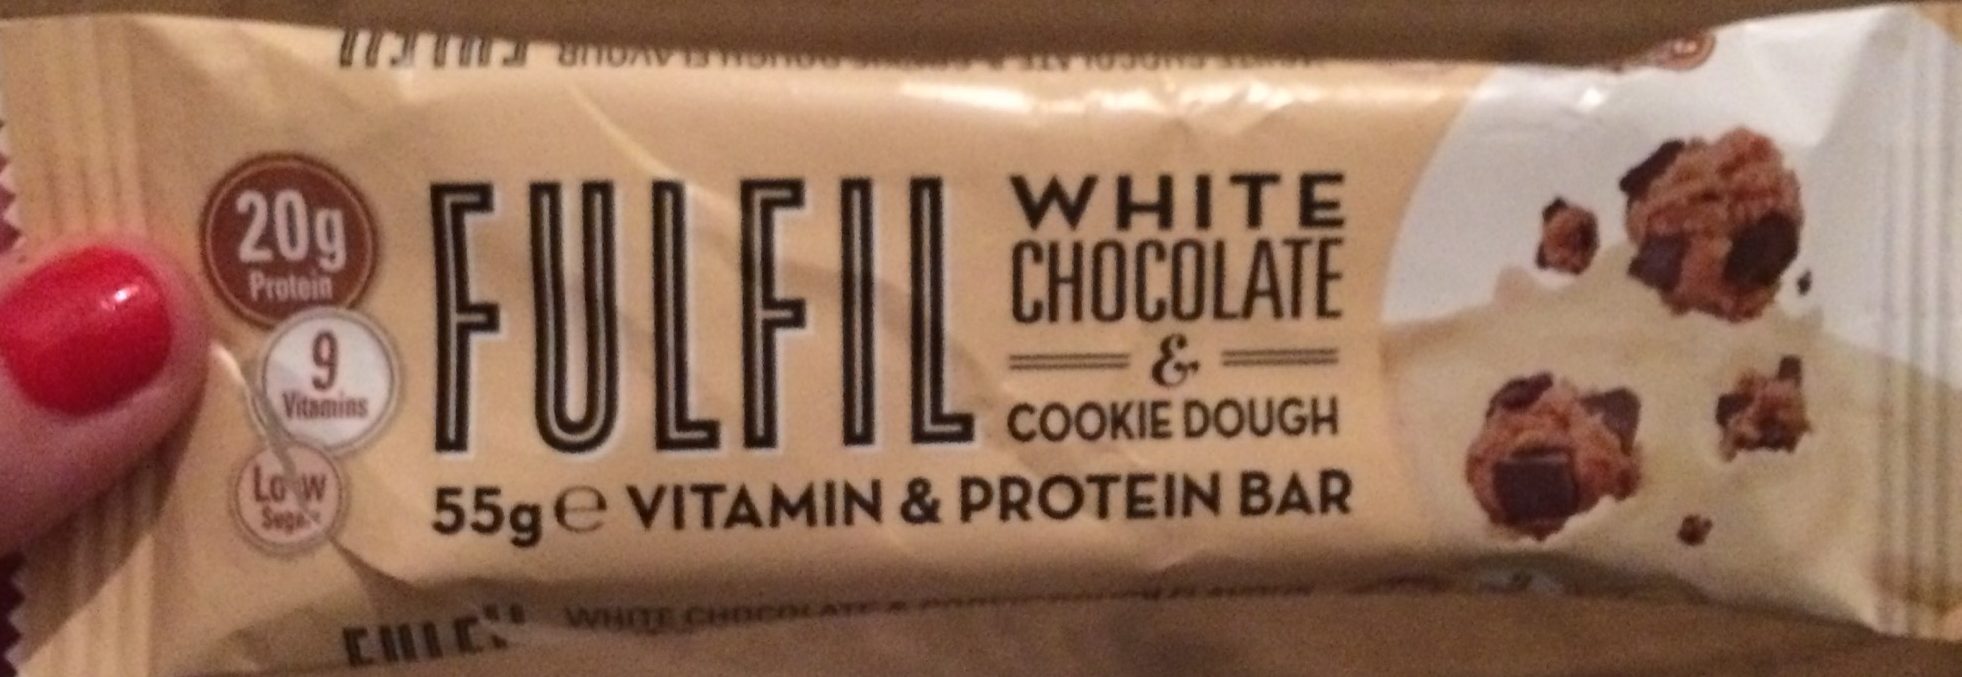 White Chocolate & Cookie Dough Vitamin & Protein Bar - Produit - fr